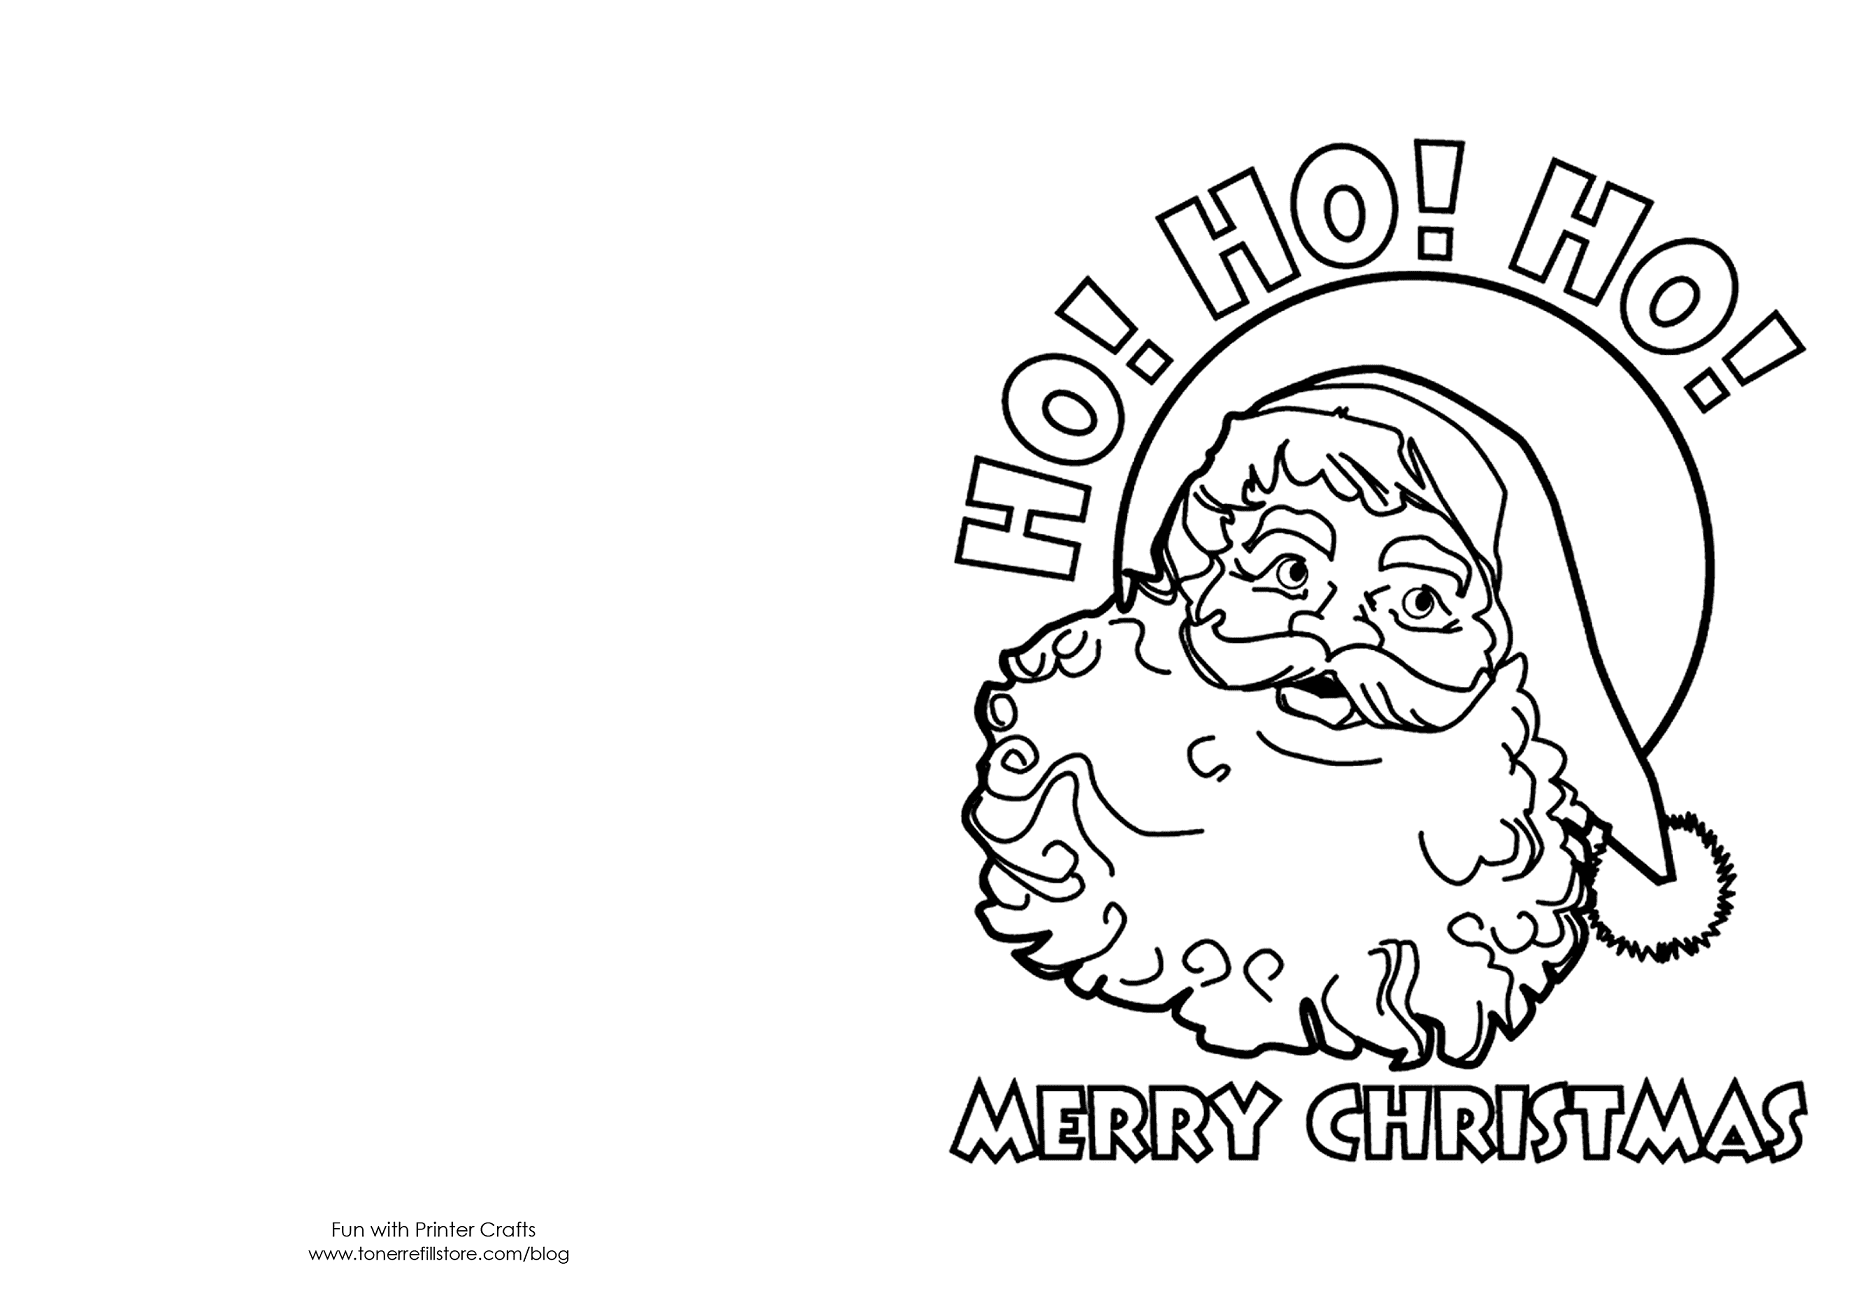 Christmas Card with Santa Coloring Page